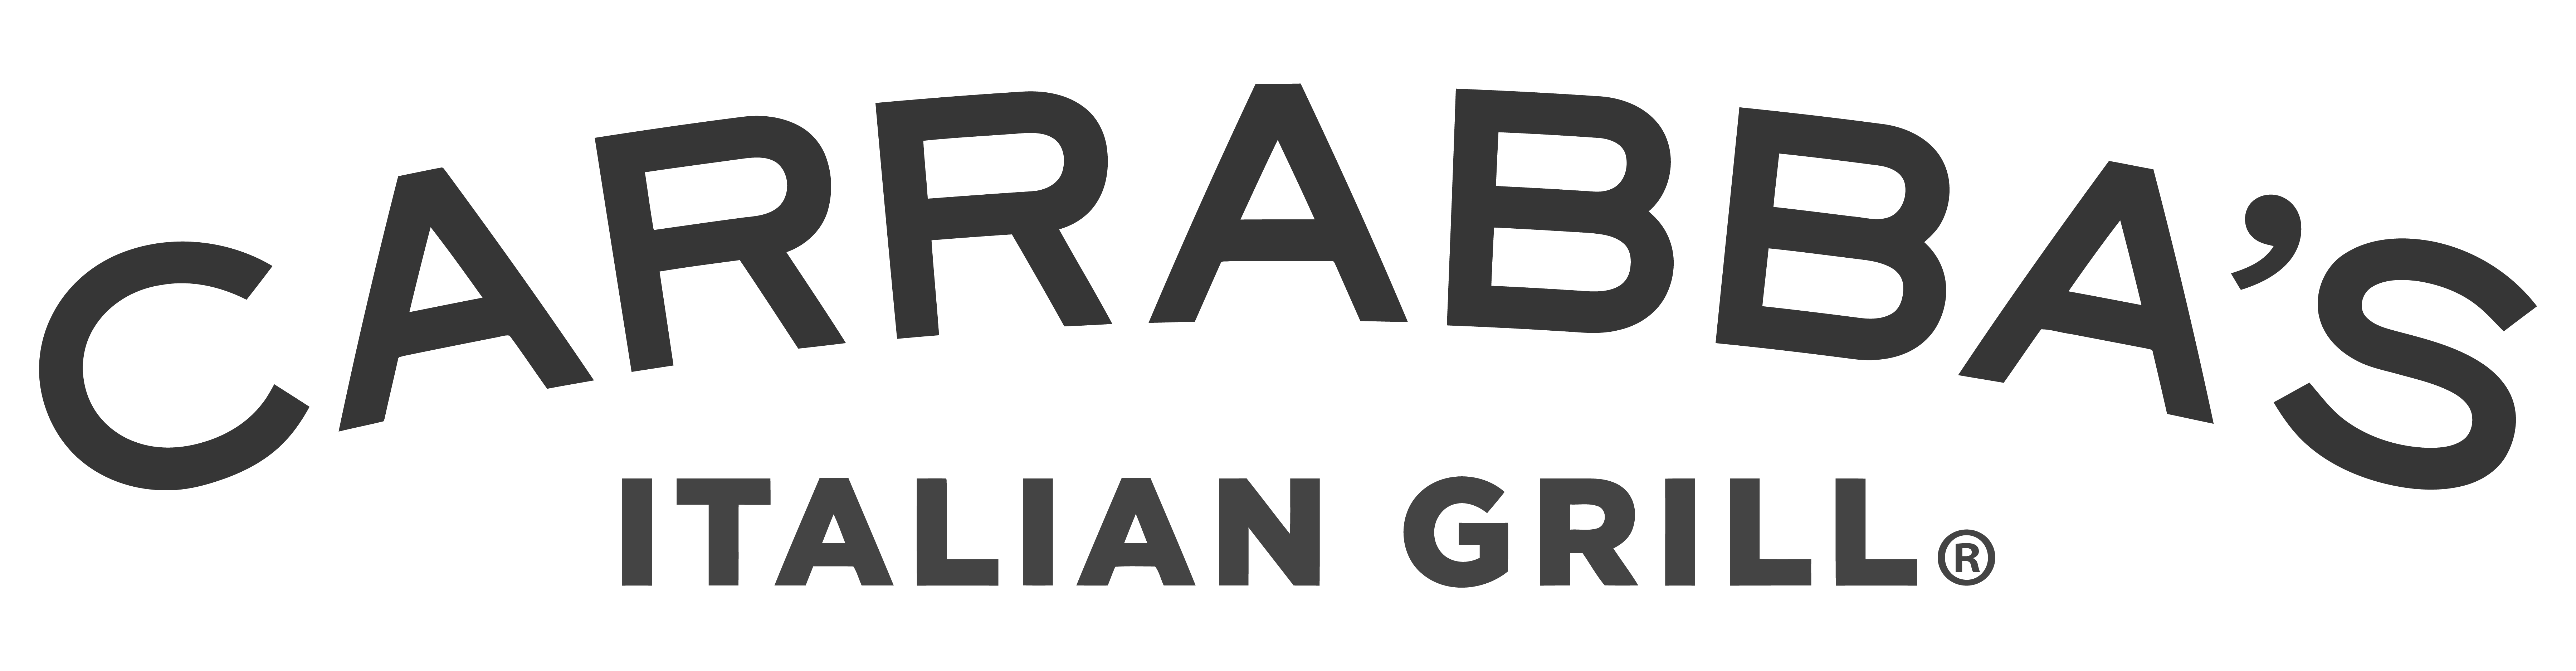 CARRABBA'S Italian Grill logo